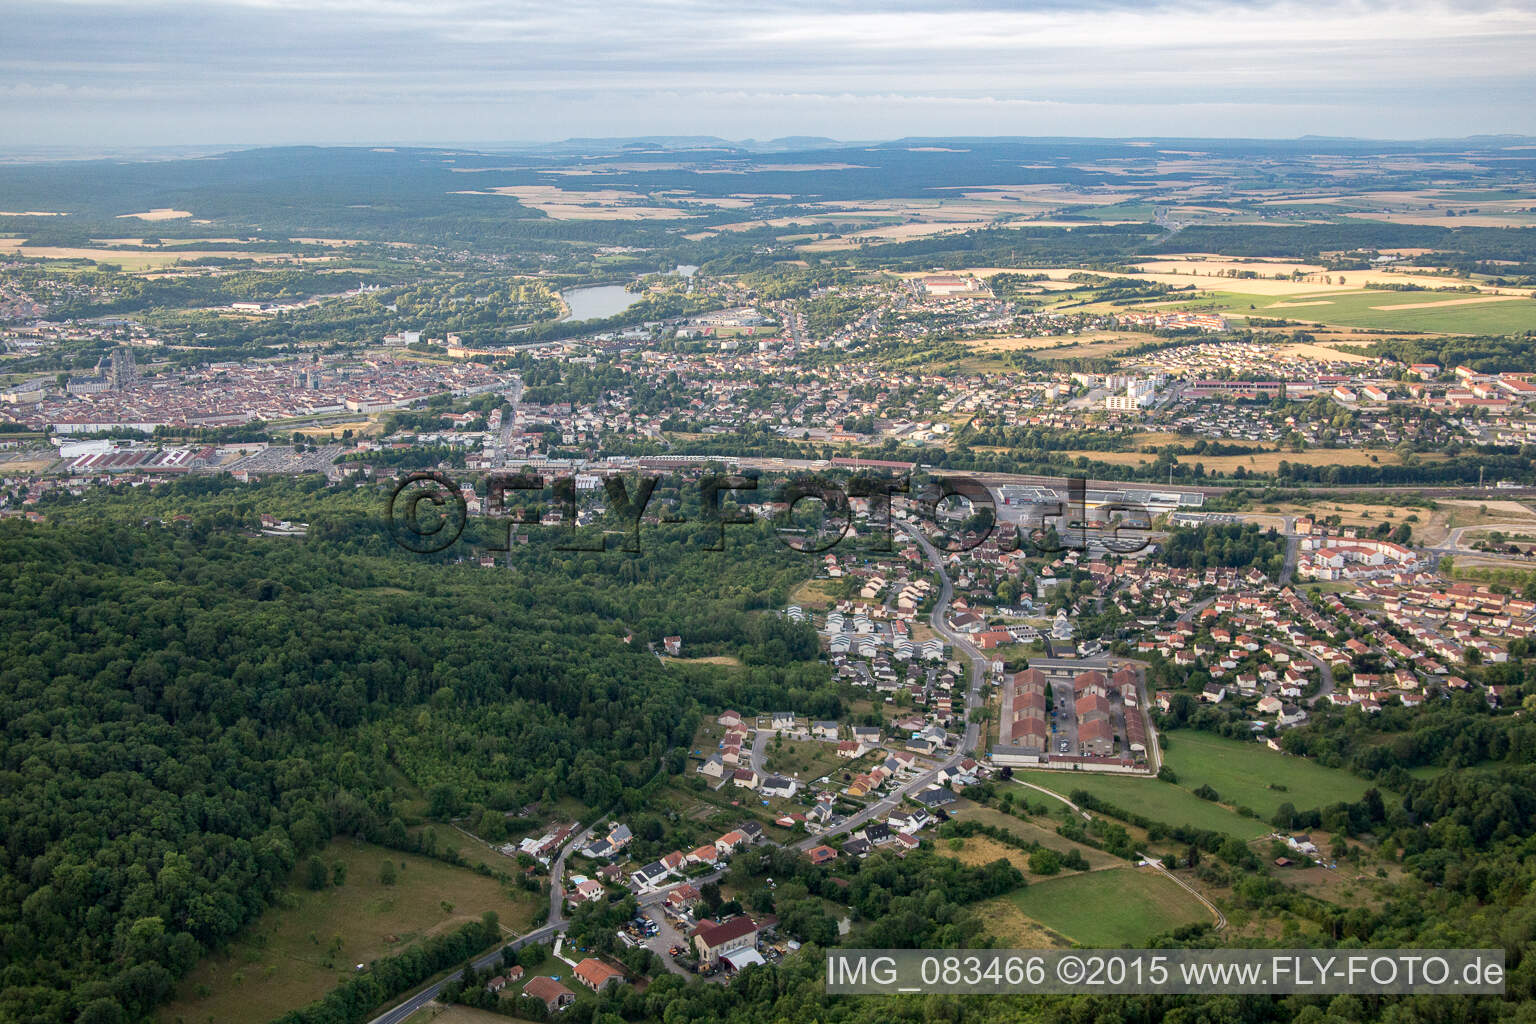 Luftbild von Écrouves im Bundesland Meurthe-et-Moselle, Frankreich